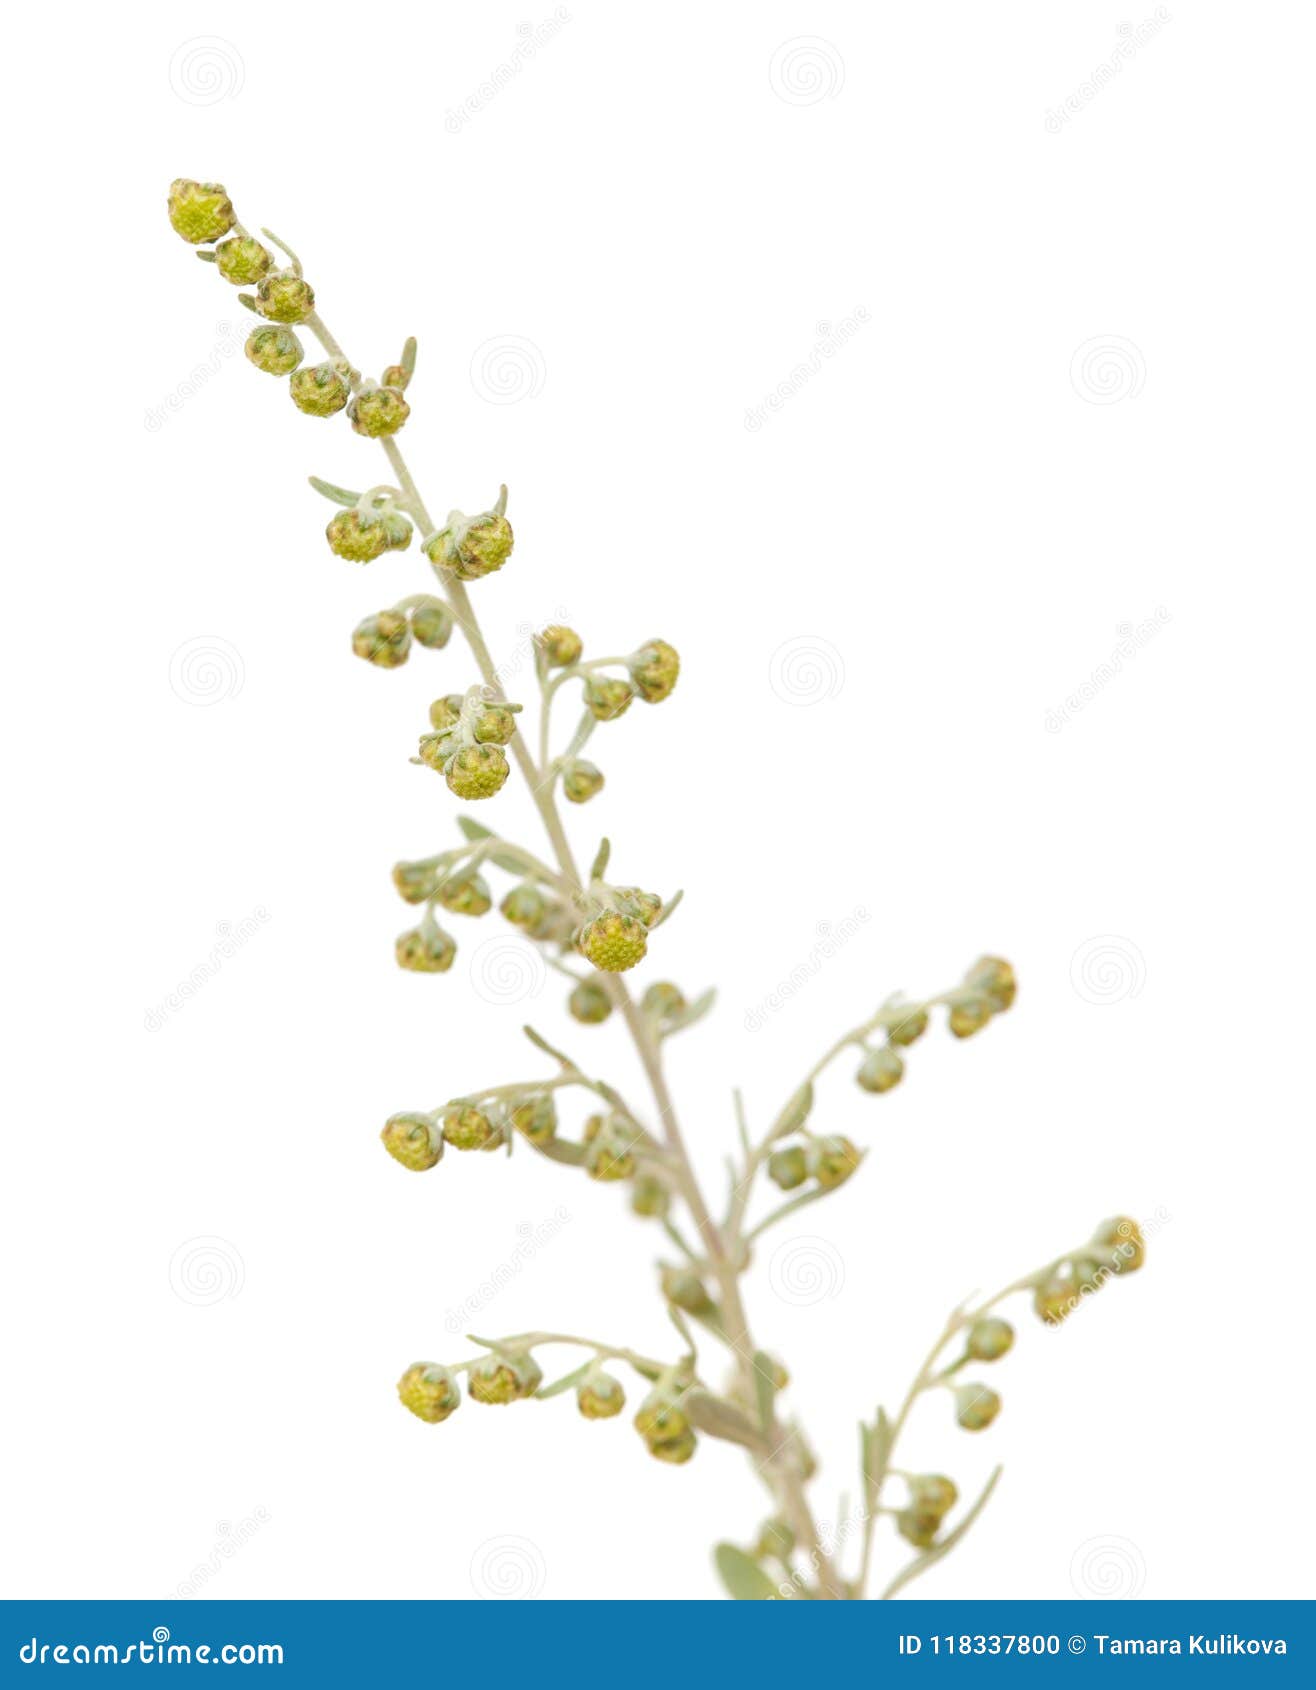 flora of gran canaria - artemisia thuscula